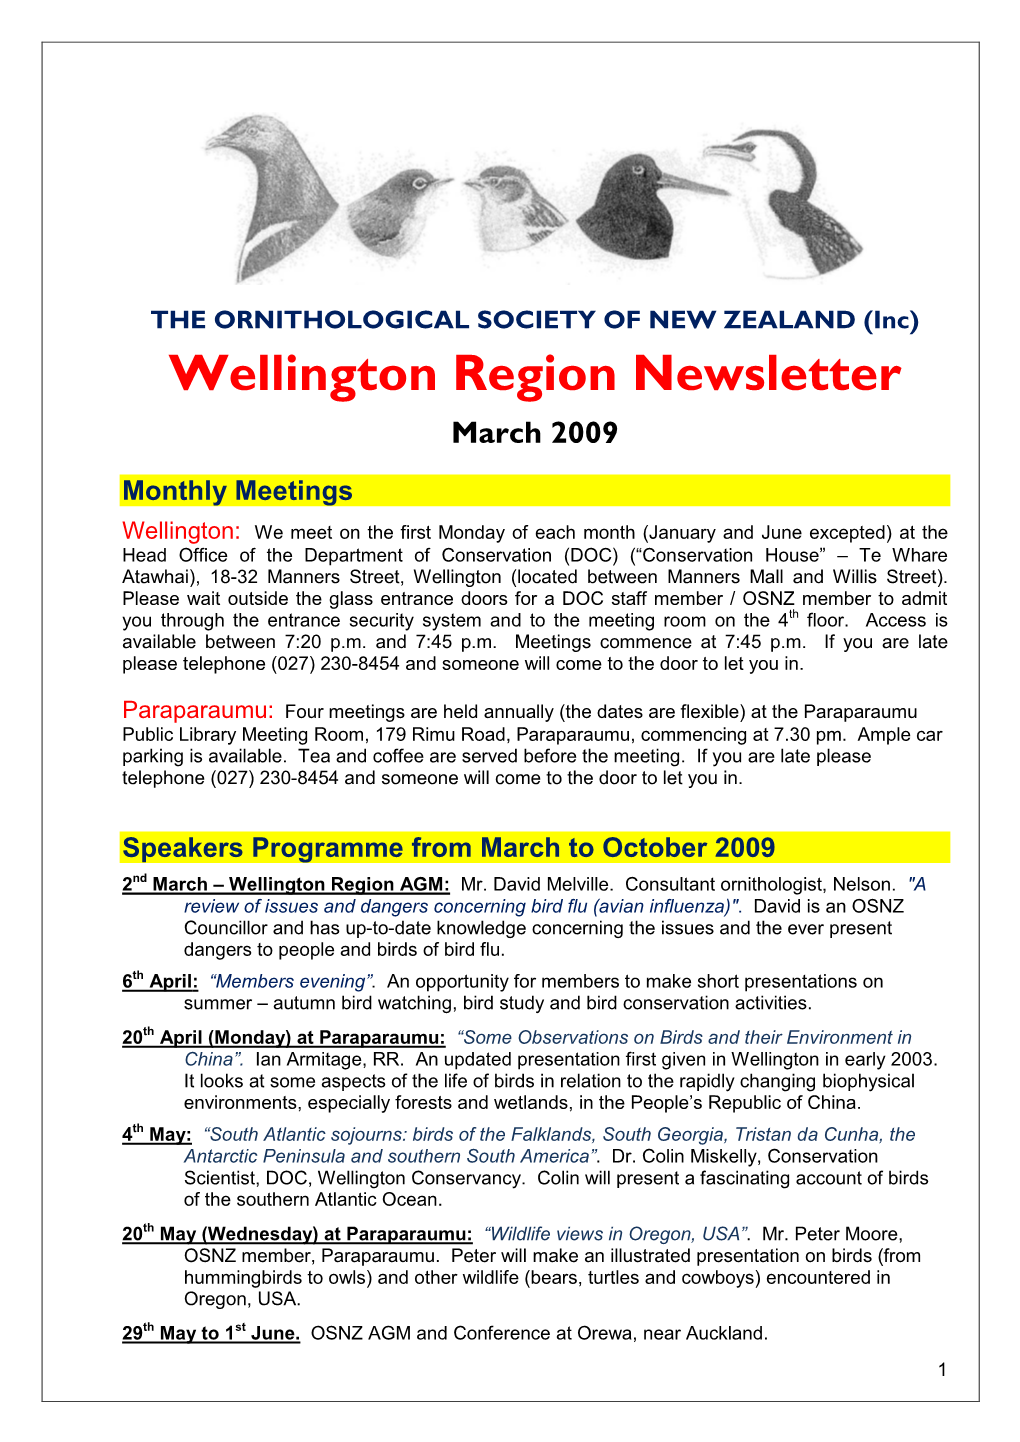 ORNITHOLOGICAL SOCIETY of NEW ZEALAND (Inc) Wellington Region Newsletter March 2009